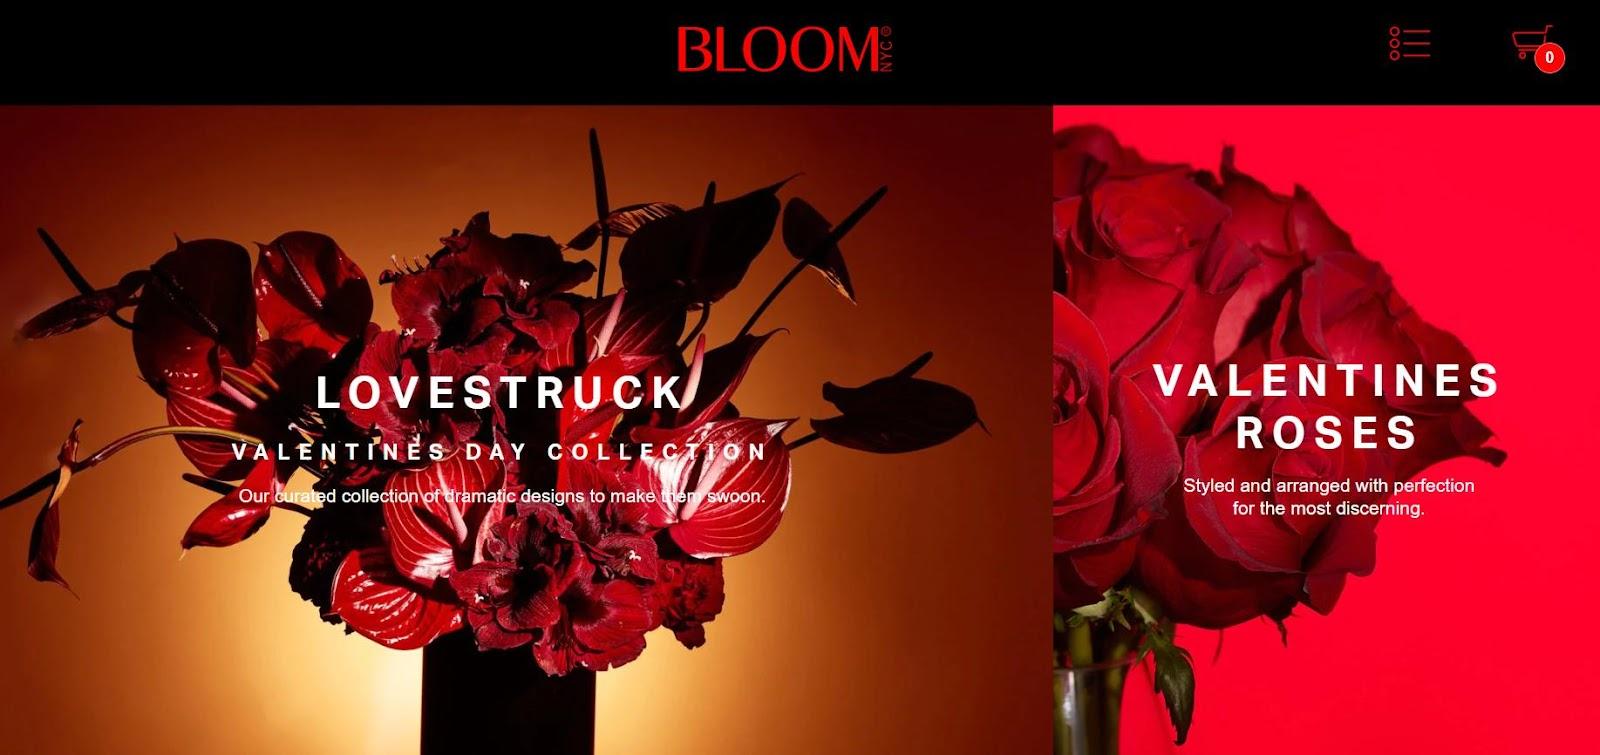 Best florist websites — design example from Bloom Flowers.